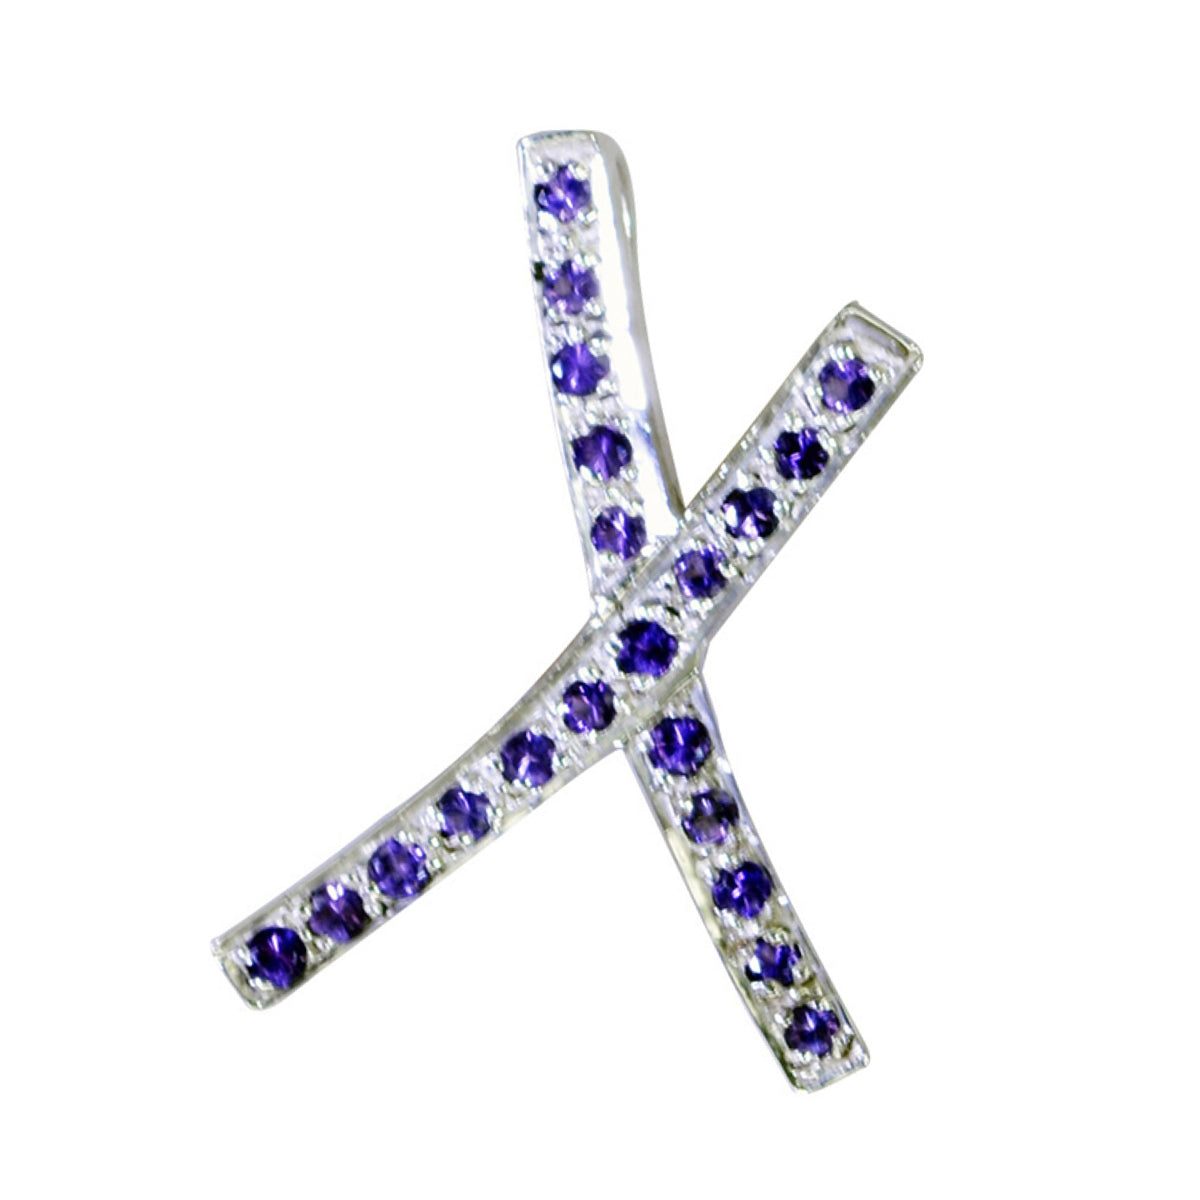 Riyo Tasty Gemstone Round Faceted Purple Amethyst 1109 Sterling Silver Pendant Gift For Birthday